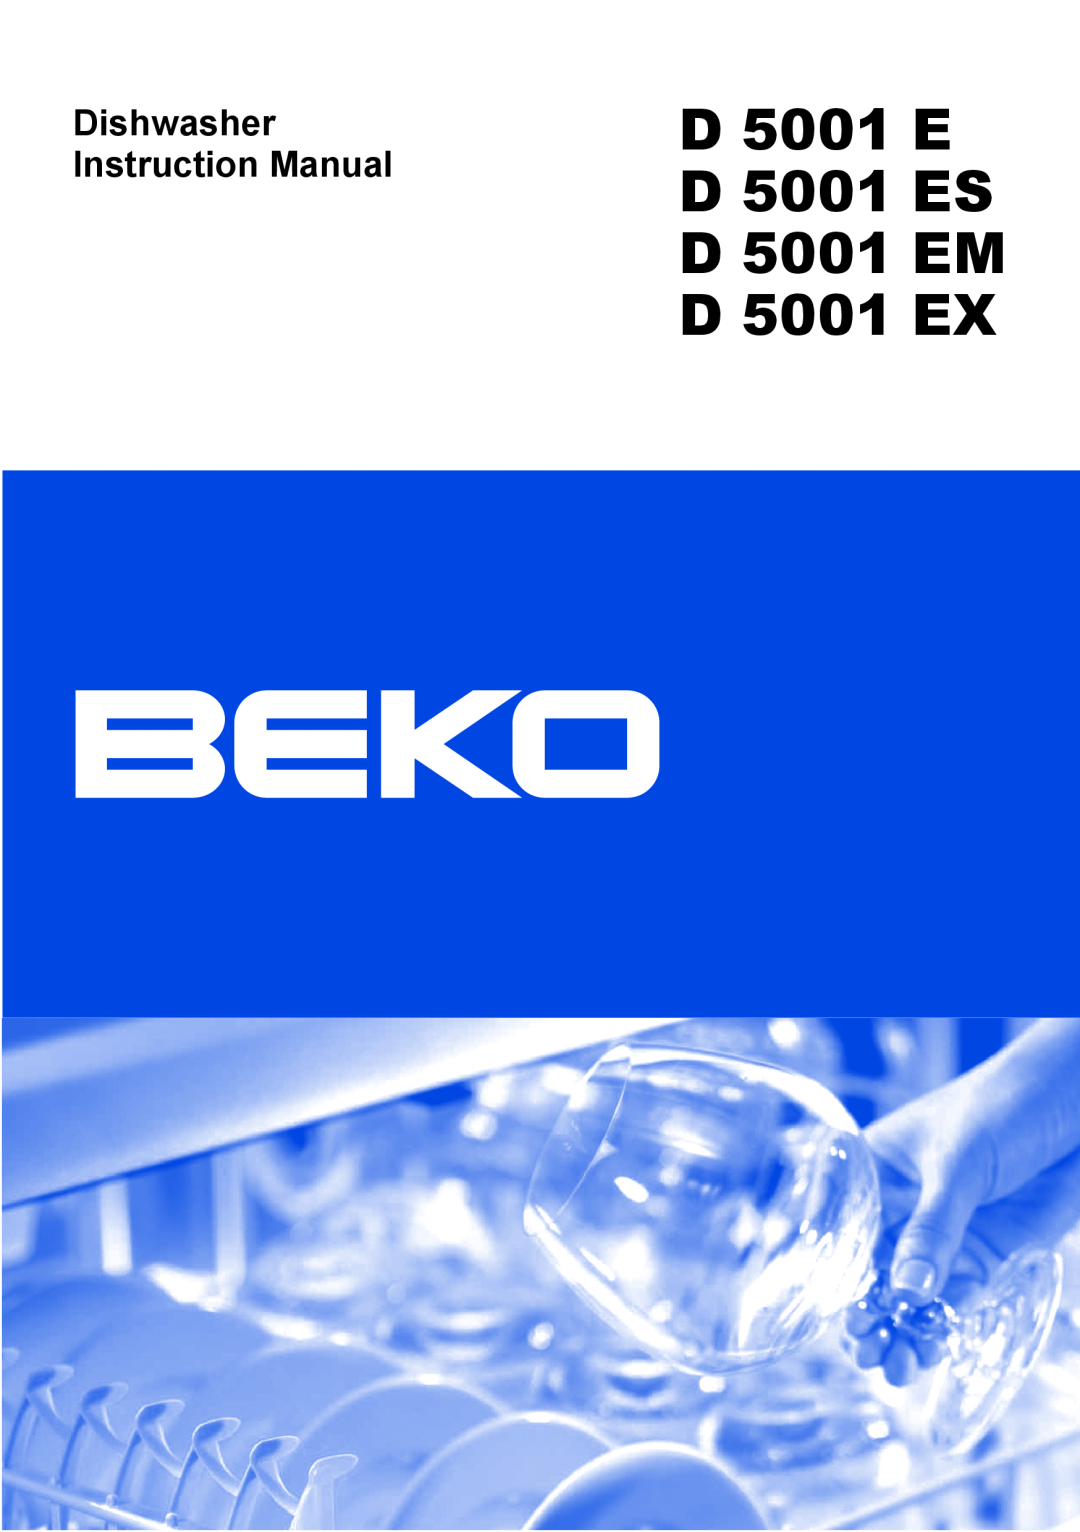 Beko instruction manual D 5001 E D 5001 ES D 5001 EM D 5001 EX, Dishwasher Instruction Manual 